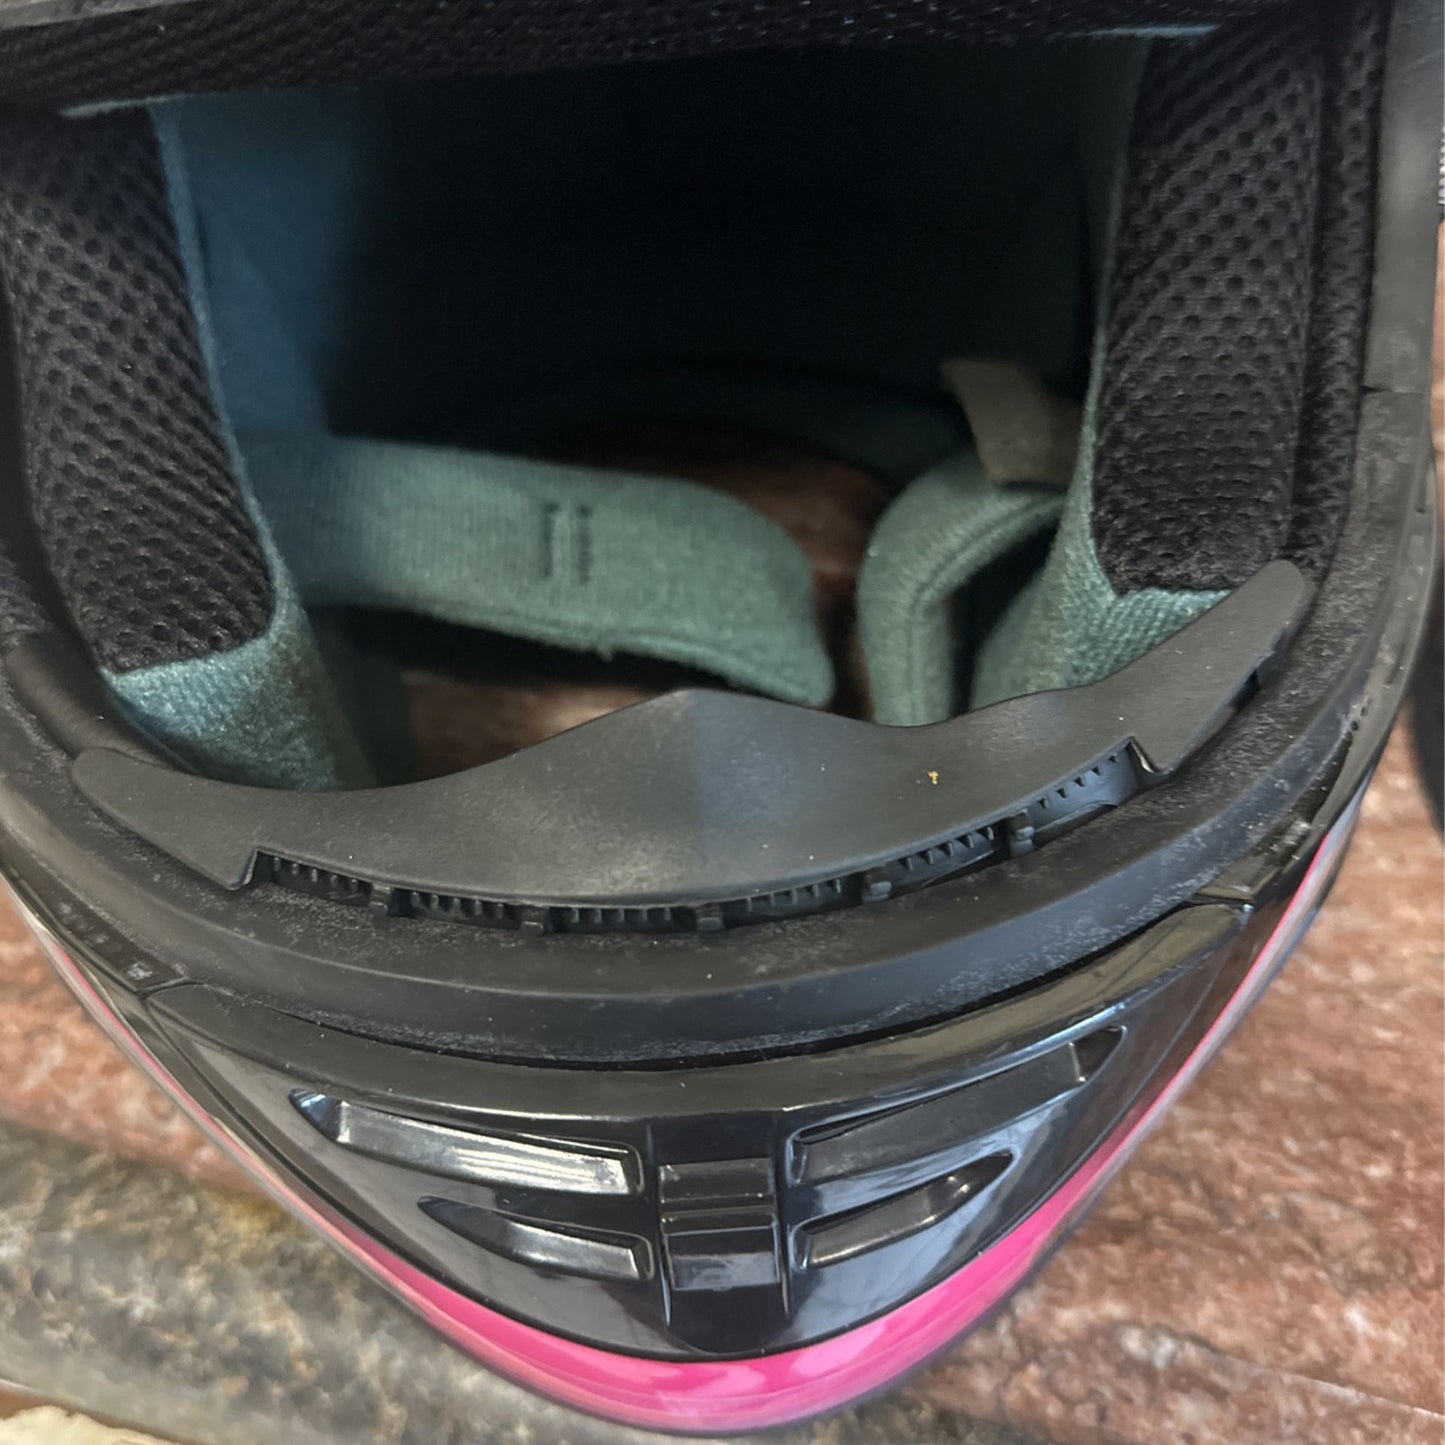 Pink Large Full Face X4 Motorcycle Helmet